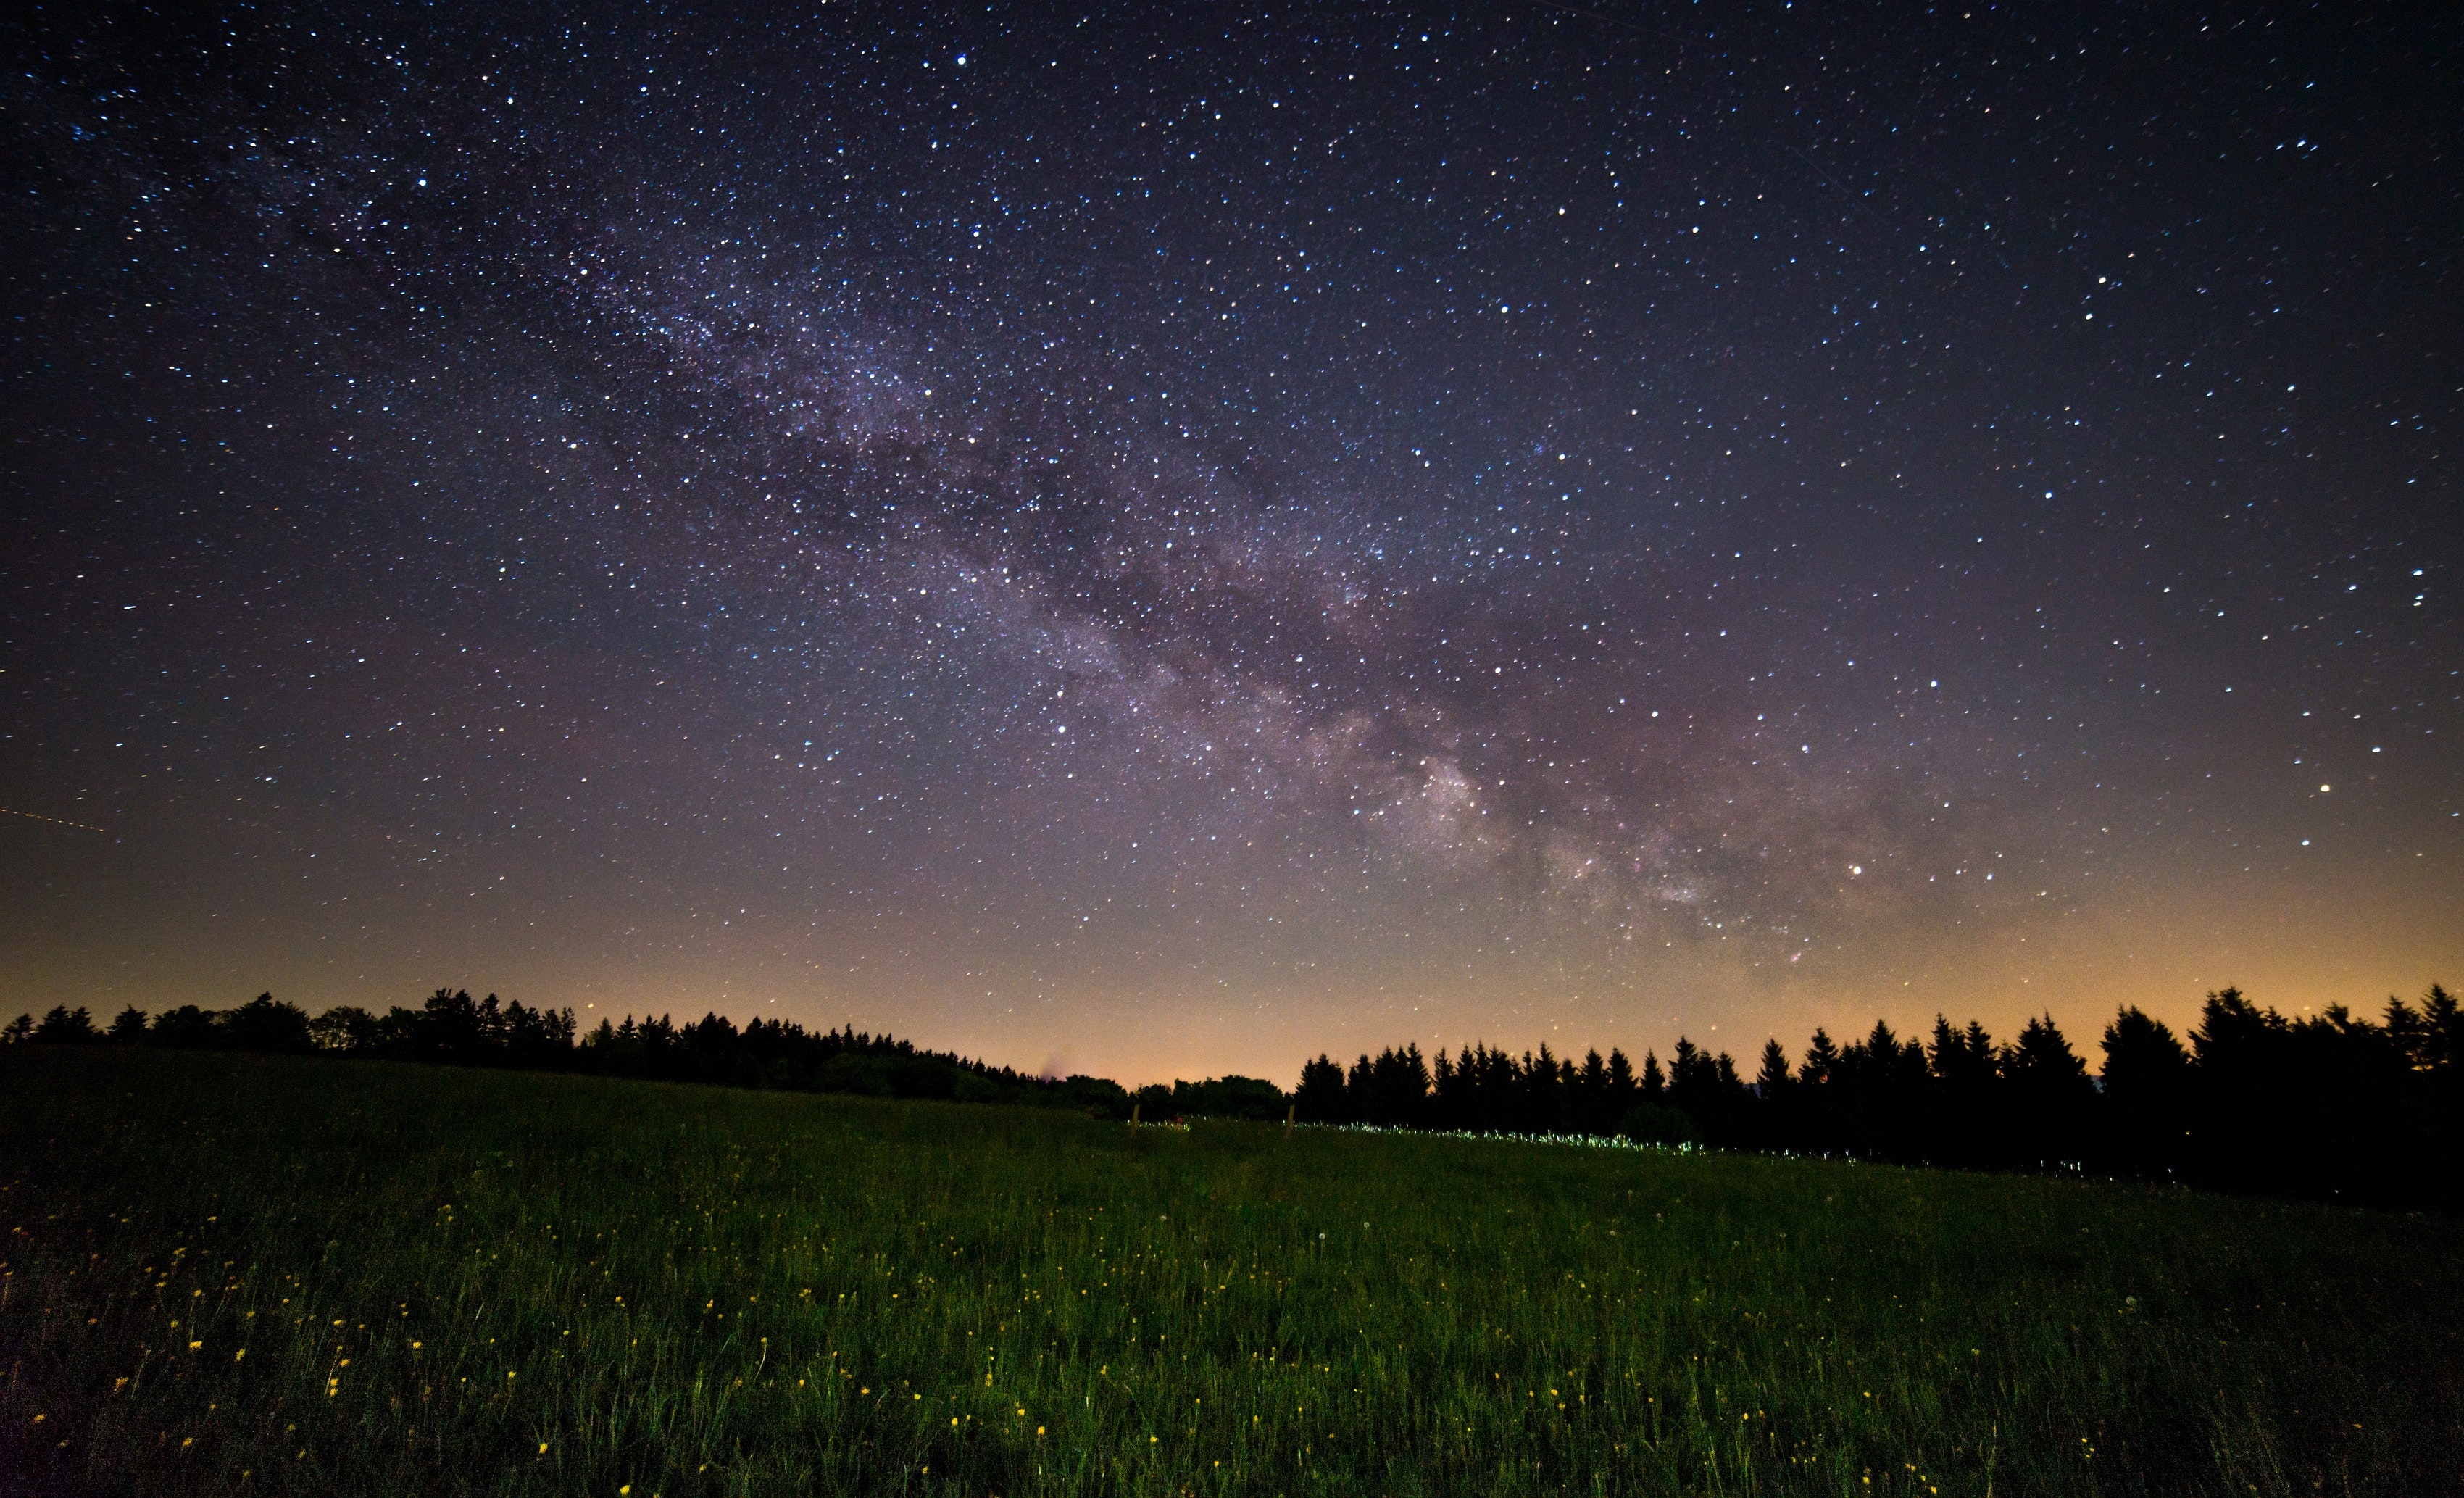 Breathtaking Night Images · Pexels · Free Stock Photos